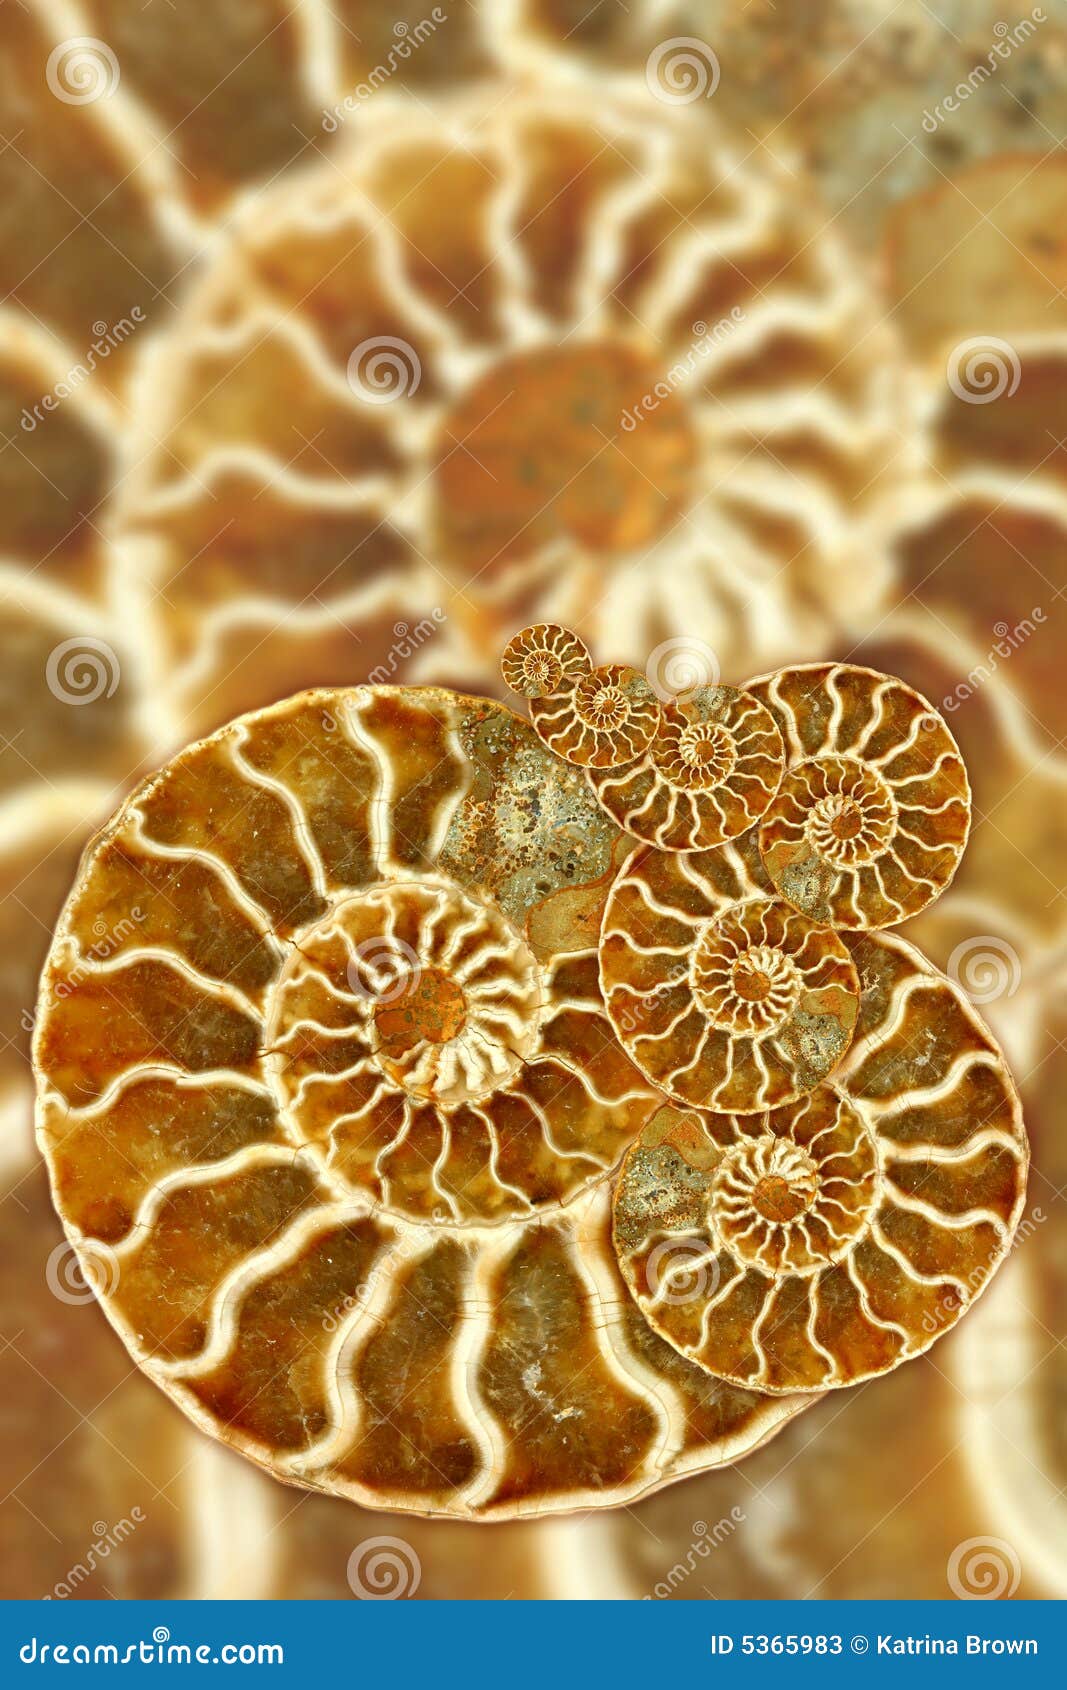 artistic fossil pattern